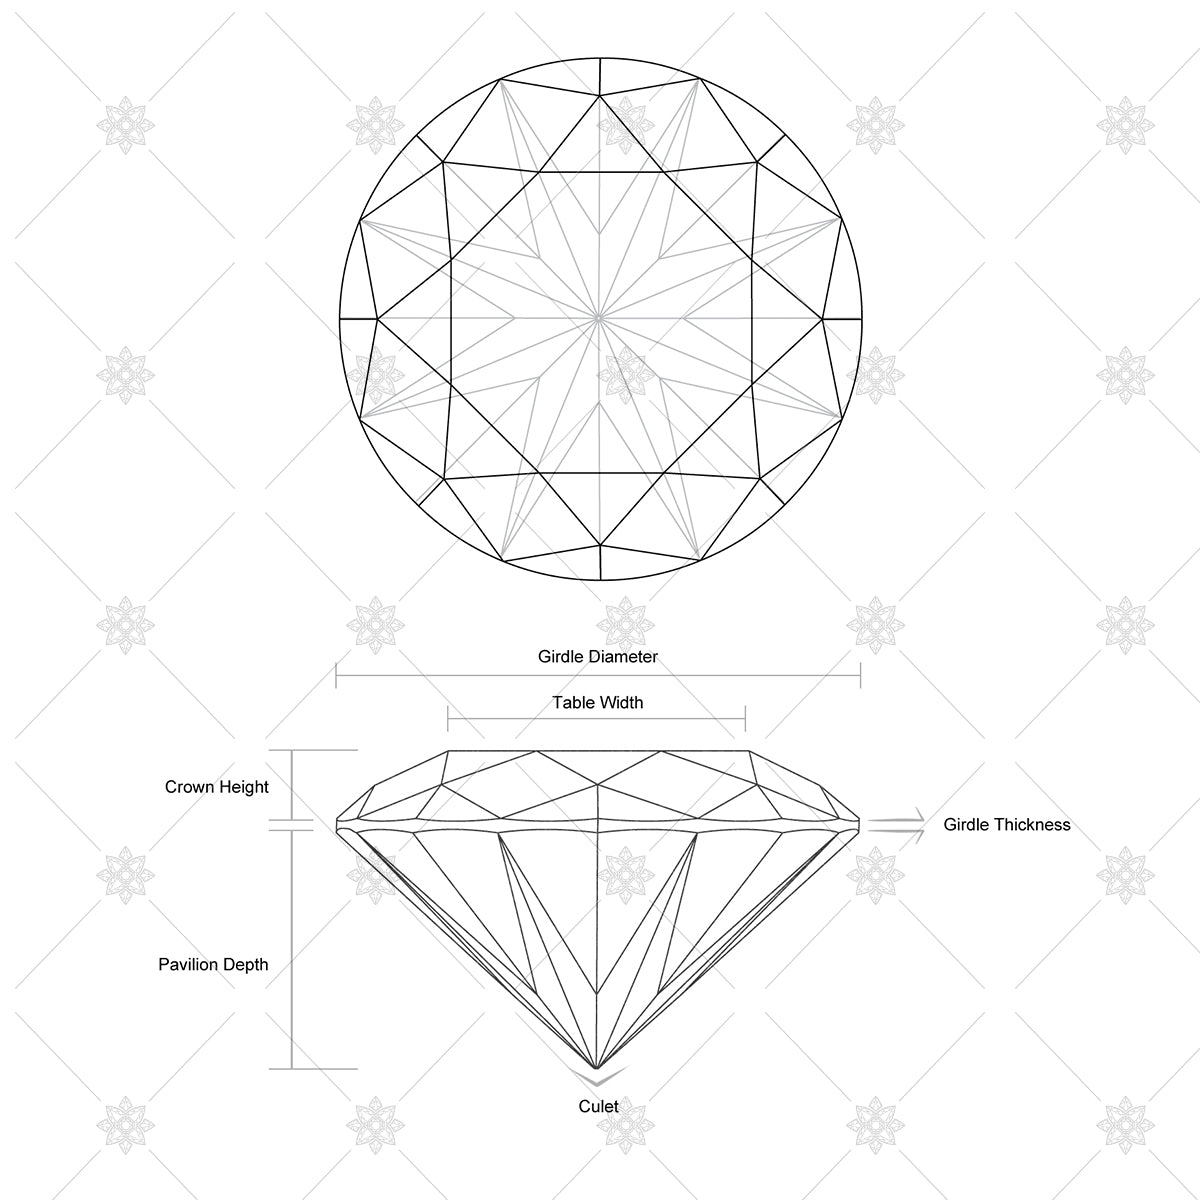 Anatomy of a Diamond Image - CJ008